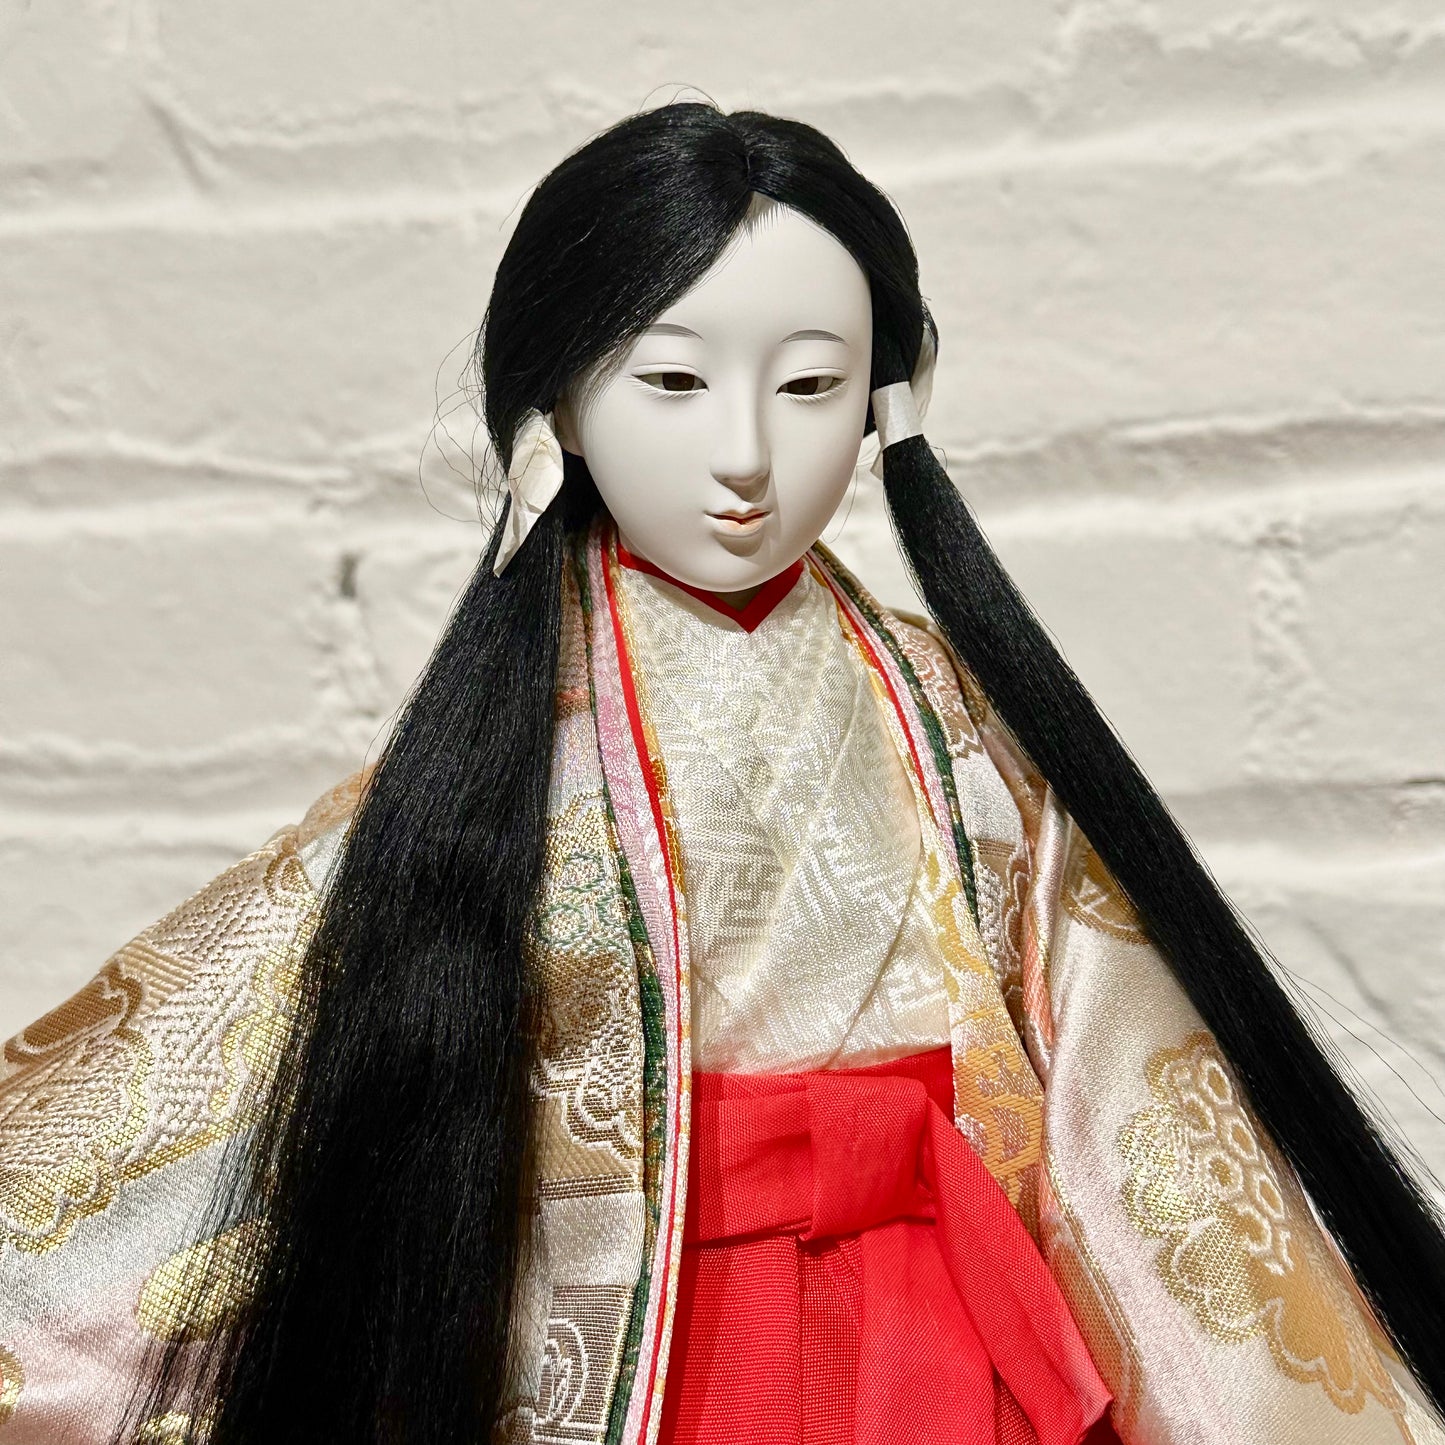 Vintage Japanese Empress Doll in Kimono w/ Writing Tools 9"